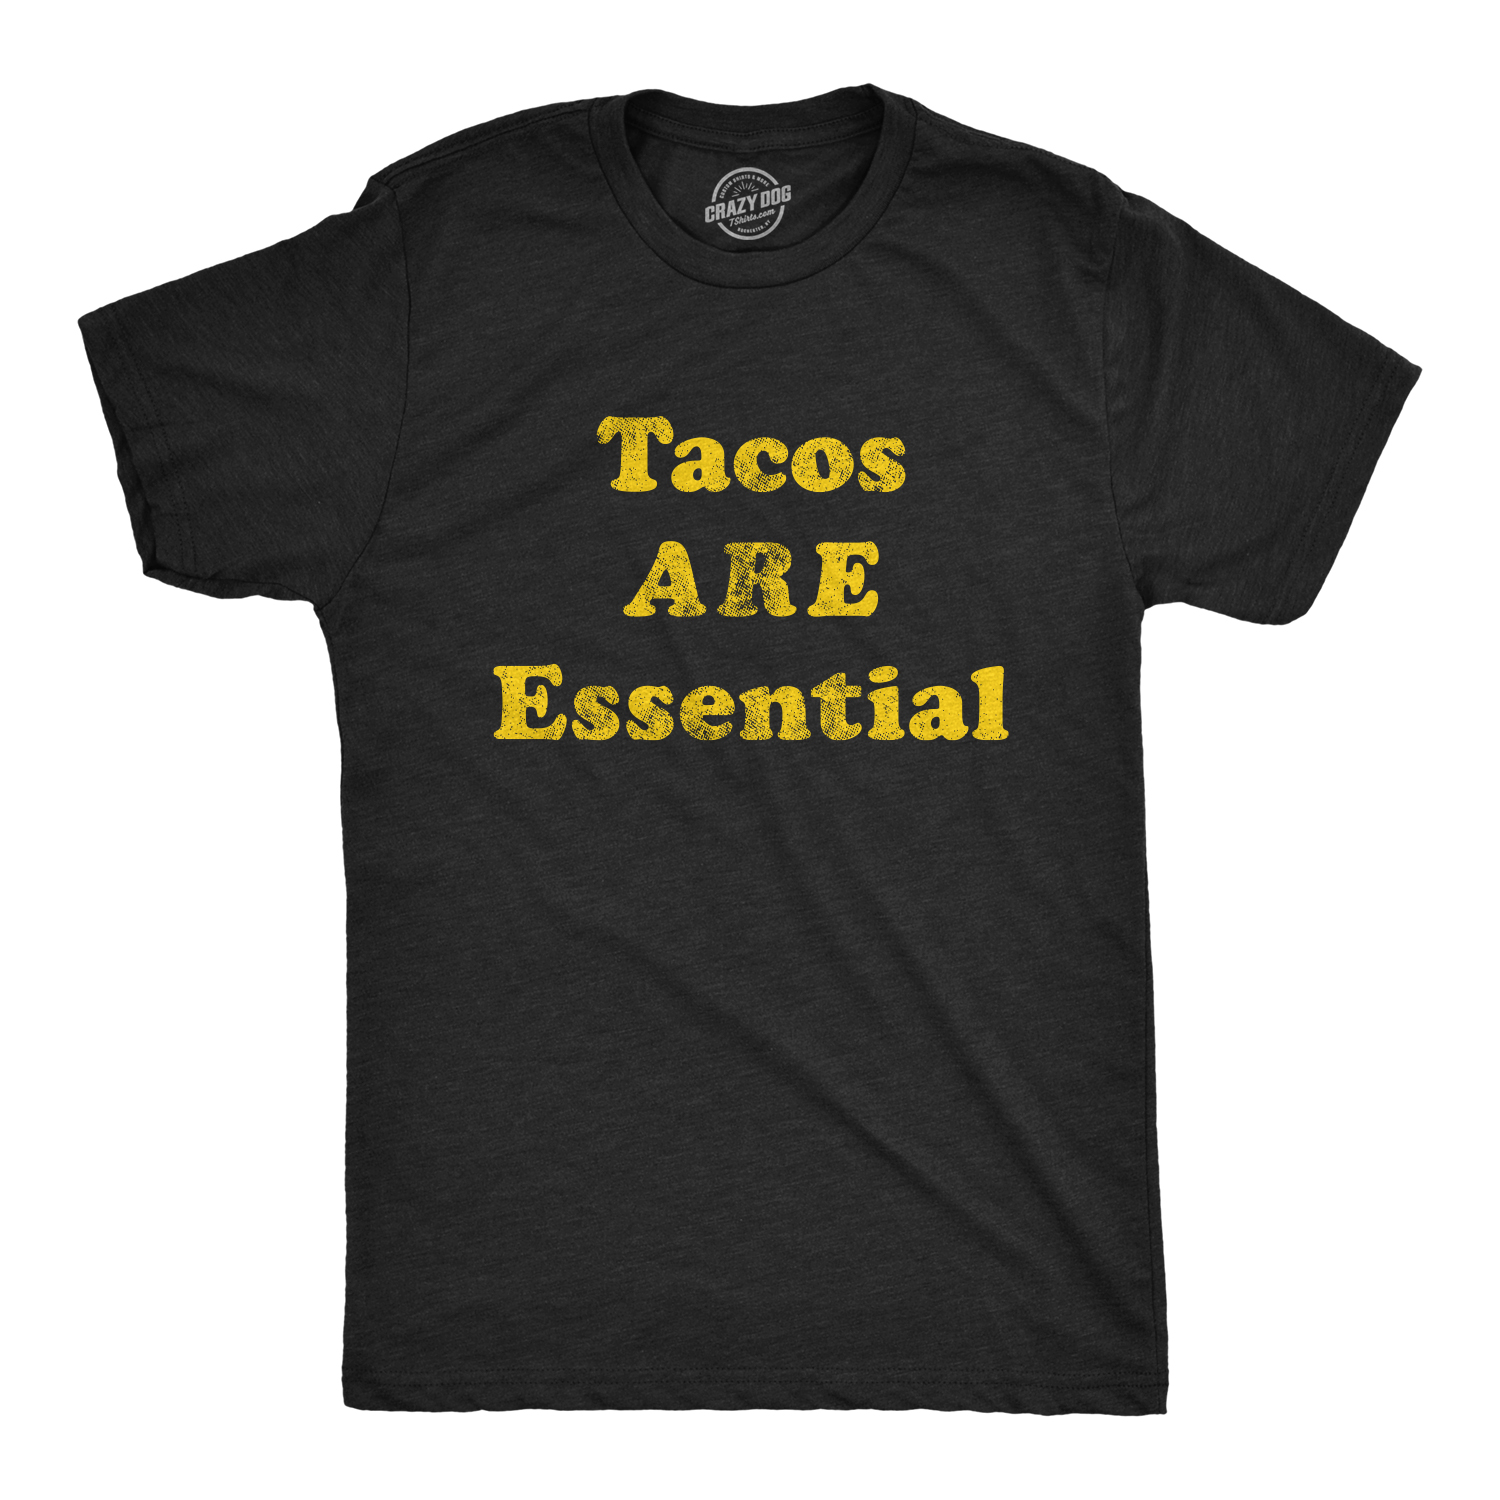 Crazy Dog Tshirts Mens Tacos Are Essential Tshirt Funny Taco Tuesday Novelty Tee